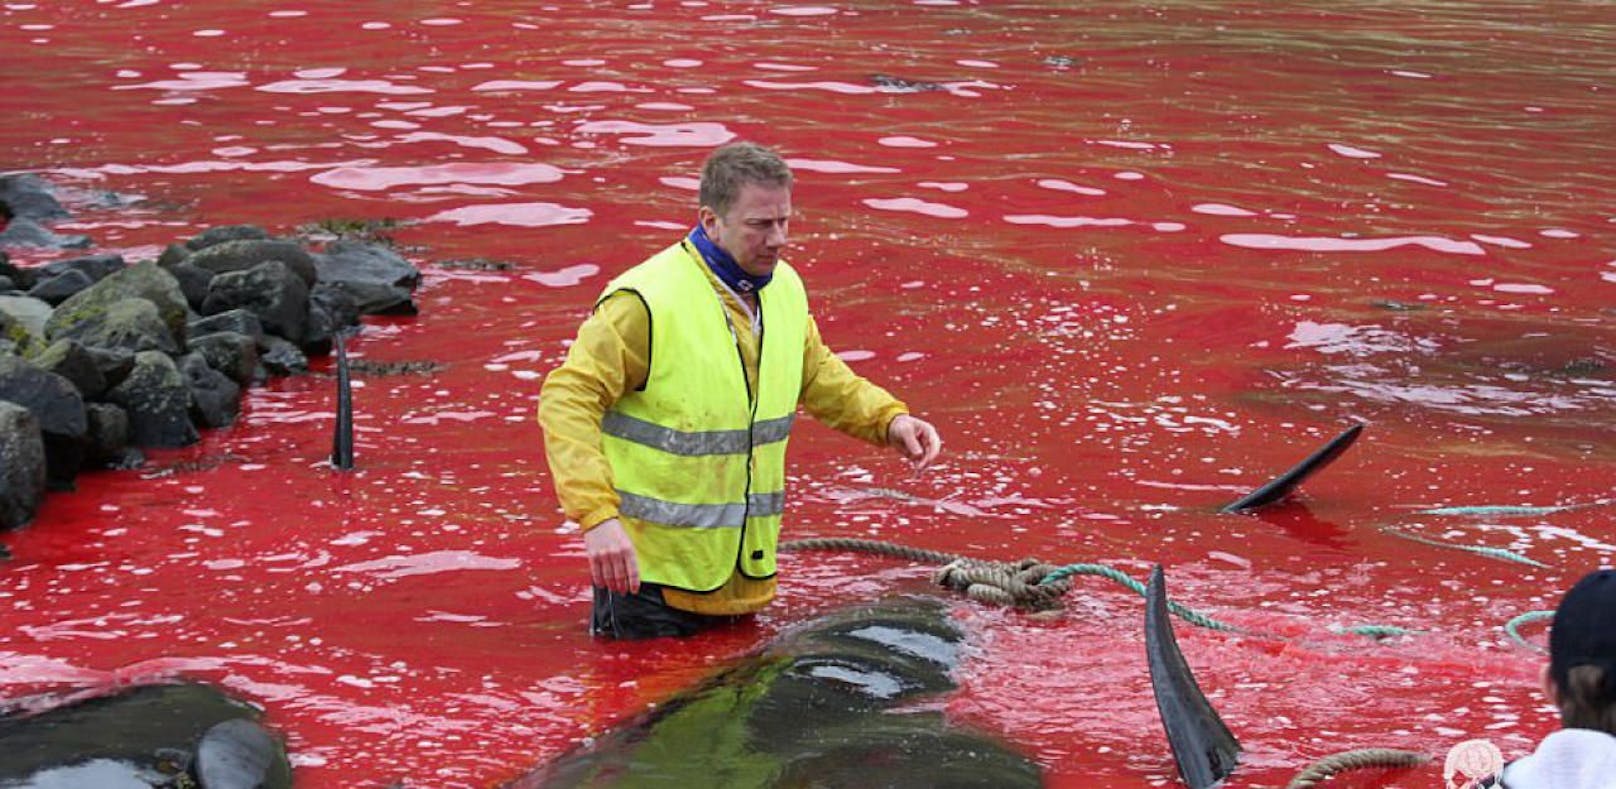 Jagd auf Wale färbt das Meer blutig rot